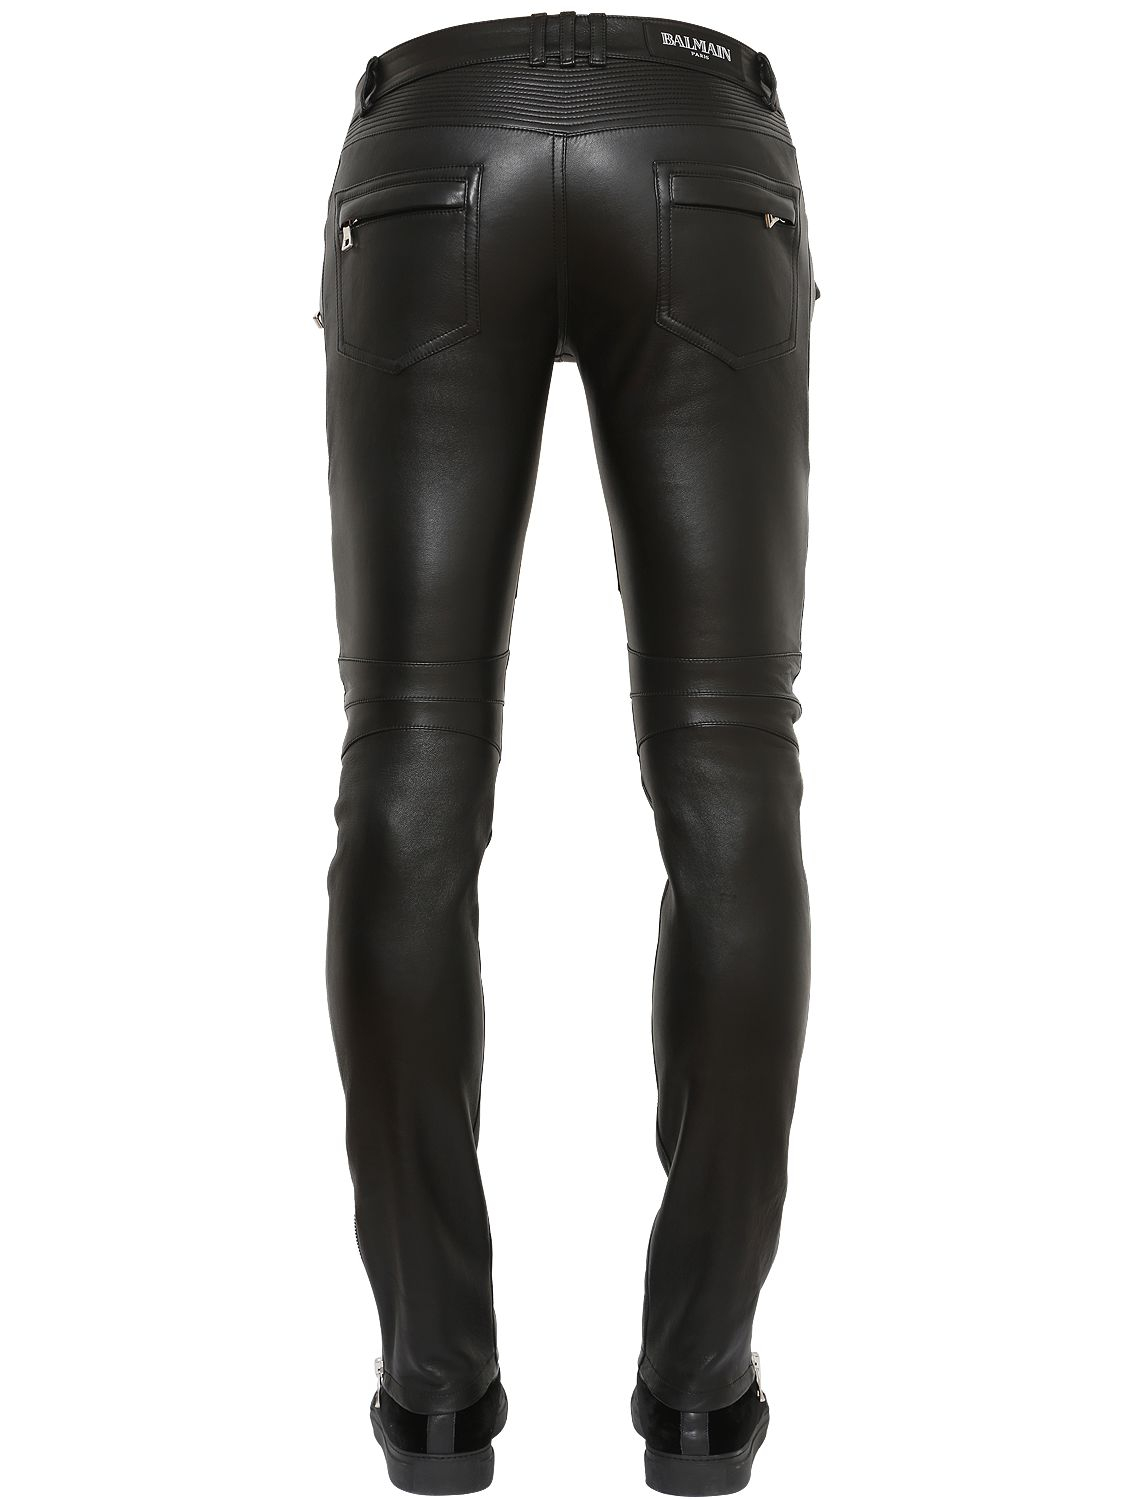 Lyst - Balmain Nappa Leather Biker Pants in Black for Men